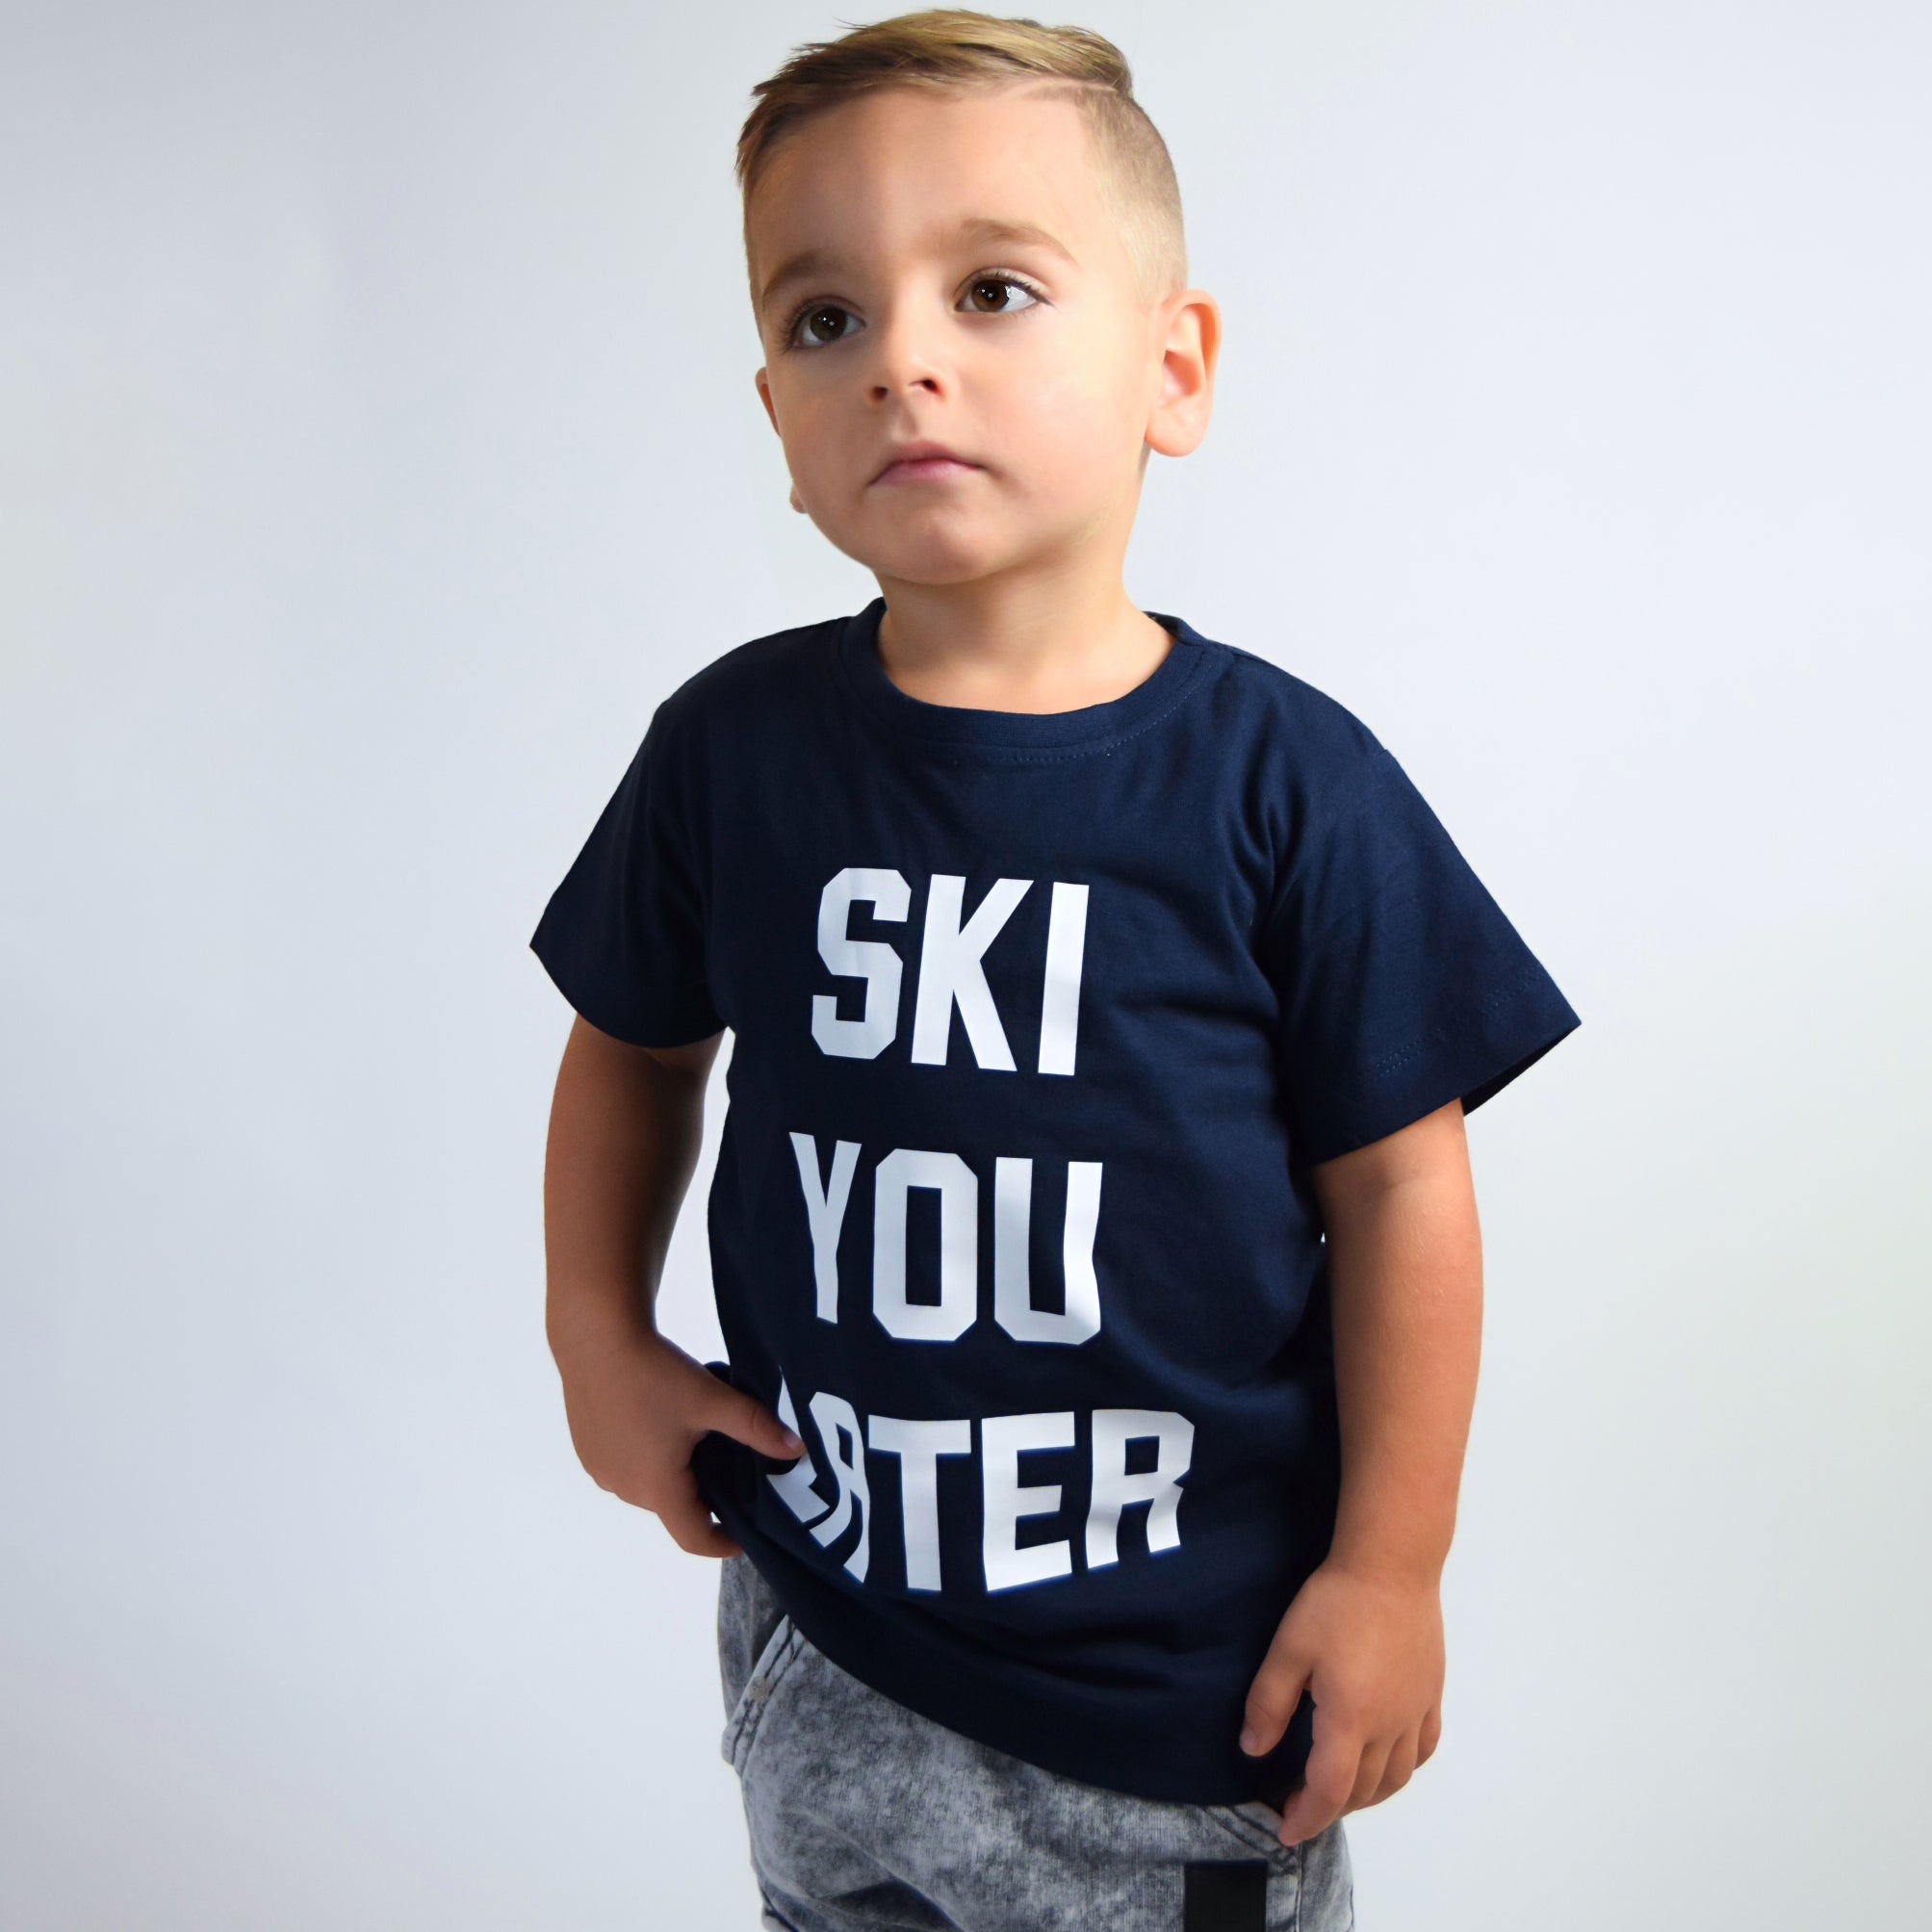 Boy wearing navy shirt with 'Ski you later' print by KMLeon.